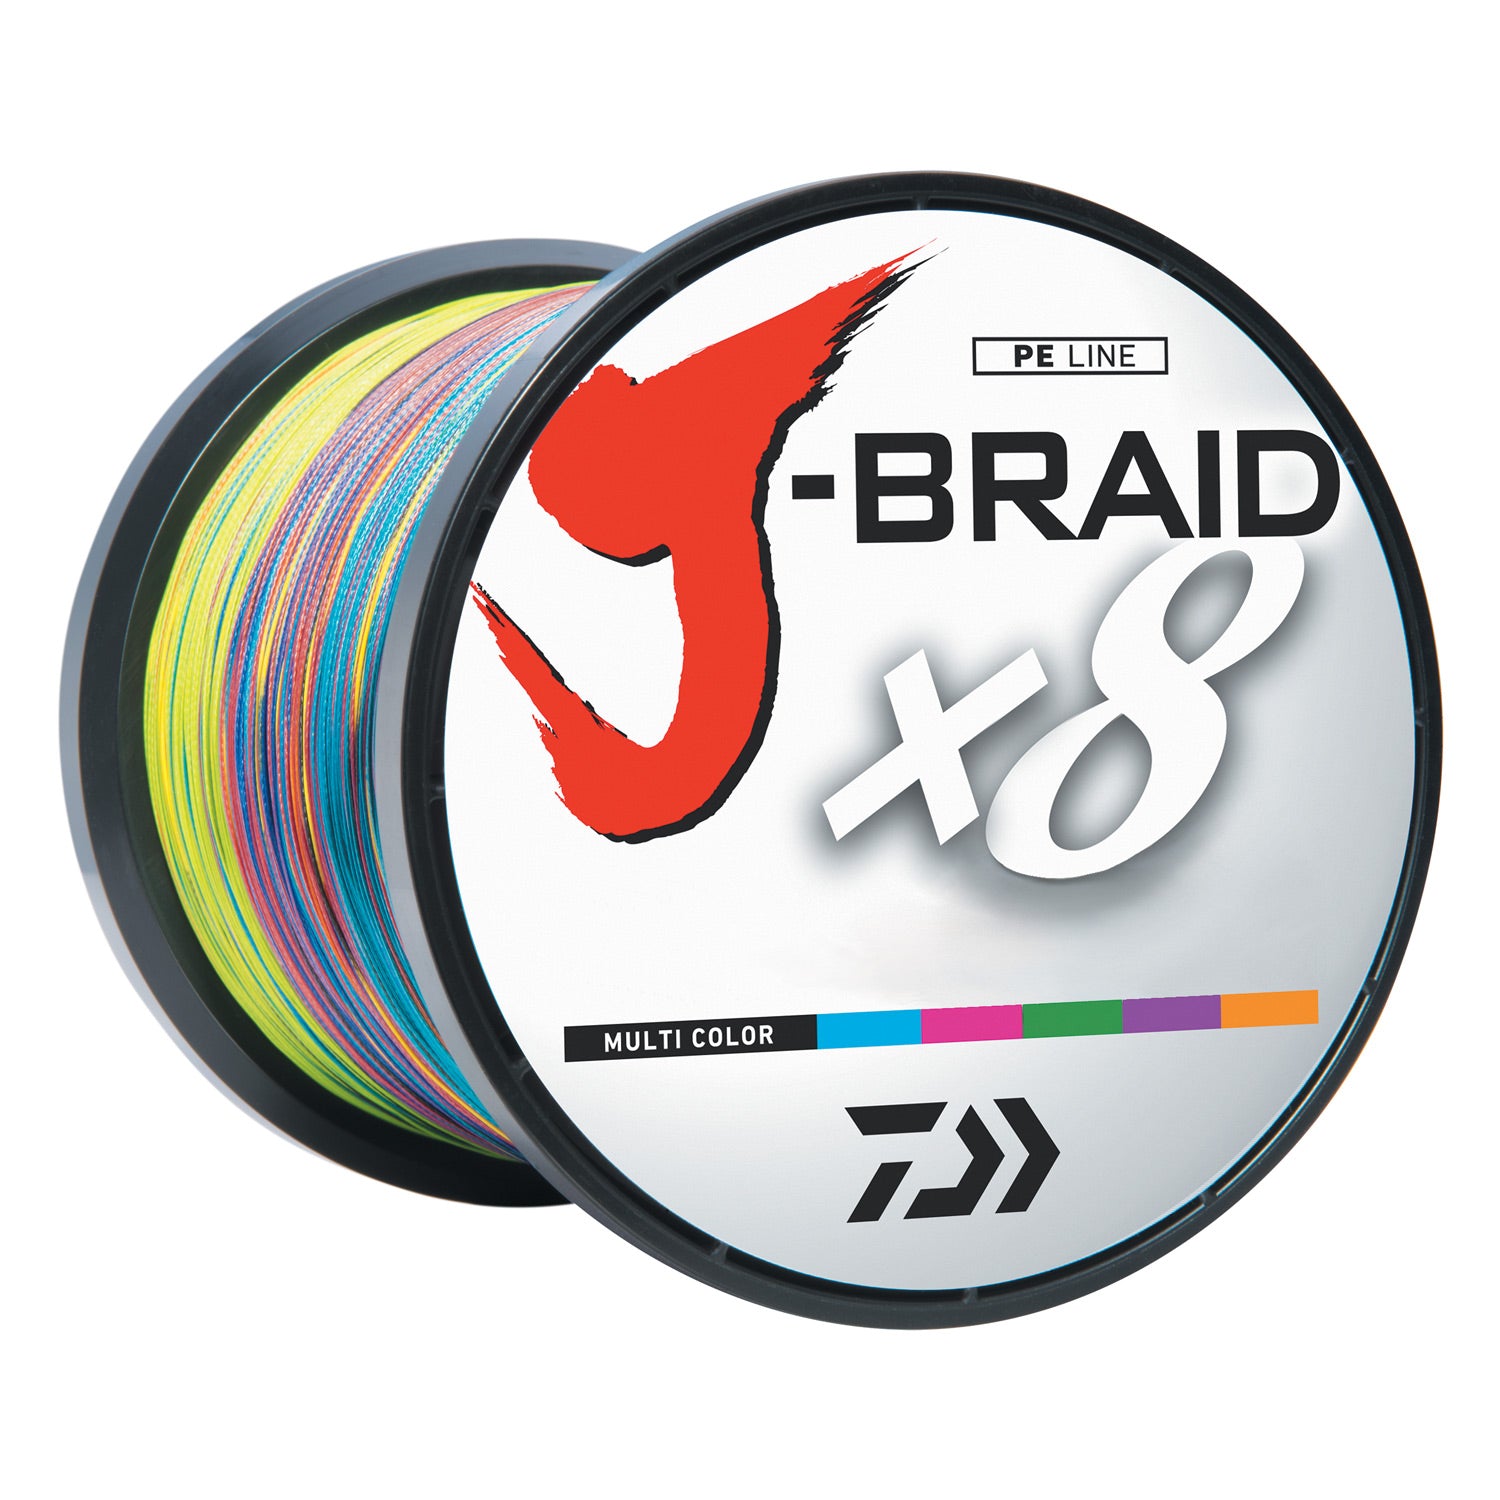 J-BRAID x8 GRAND BRAIDED LINE - ISLAND BLUE – Daiwa US